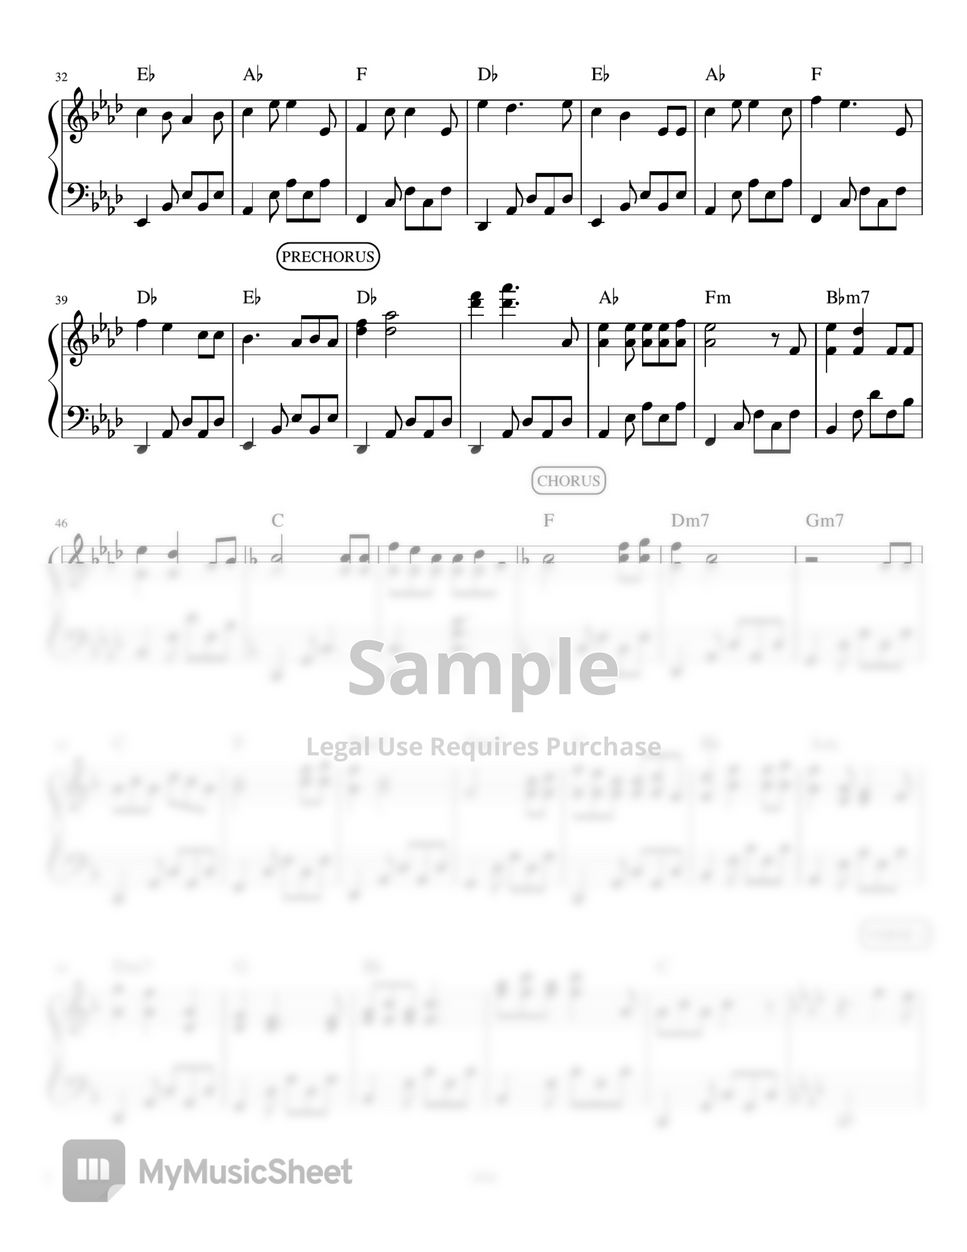 Ben&Ben - Bibingka (piano sheet music) by Mel's Music Corner